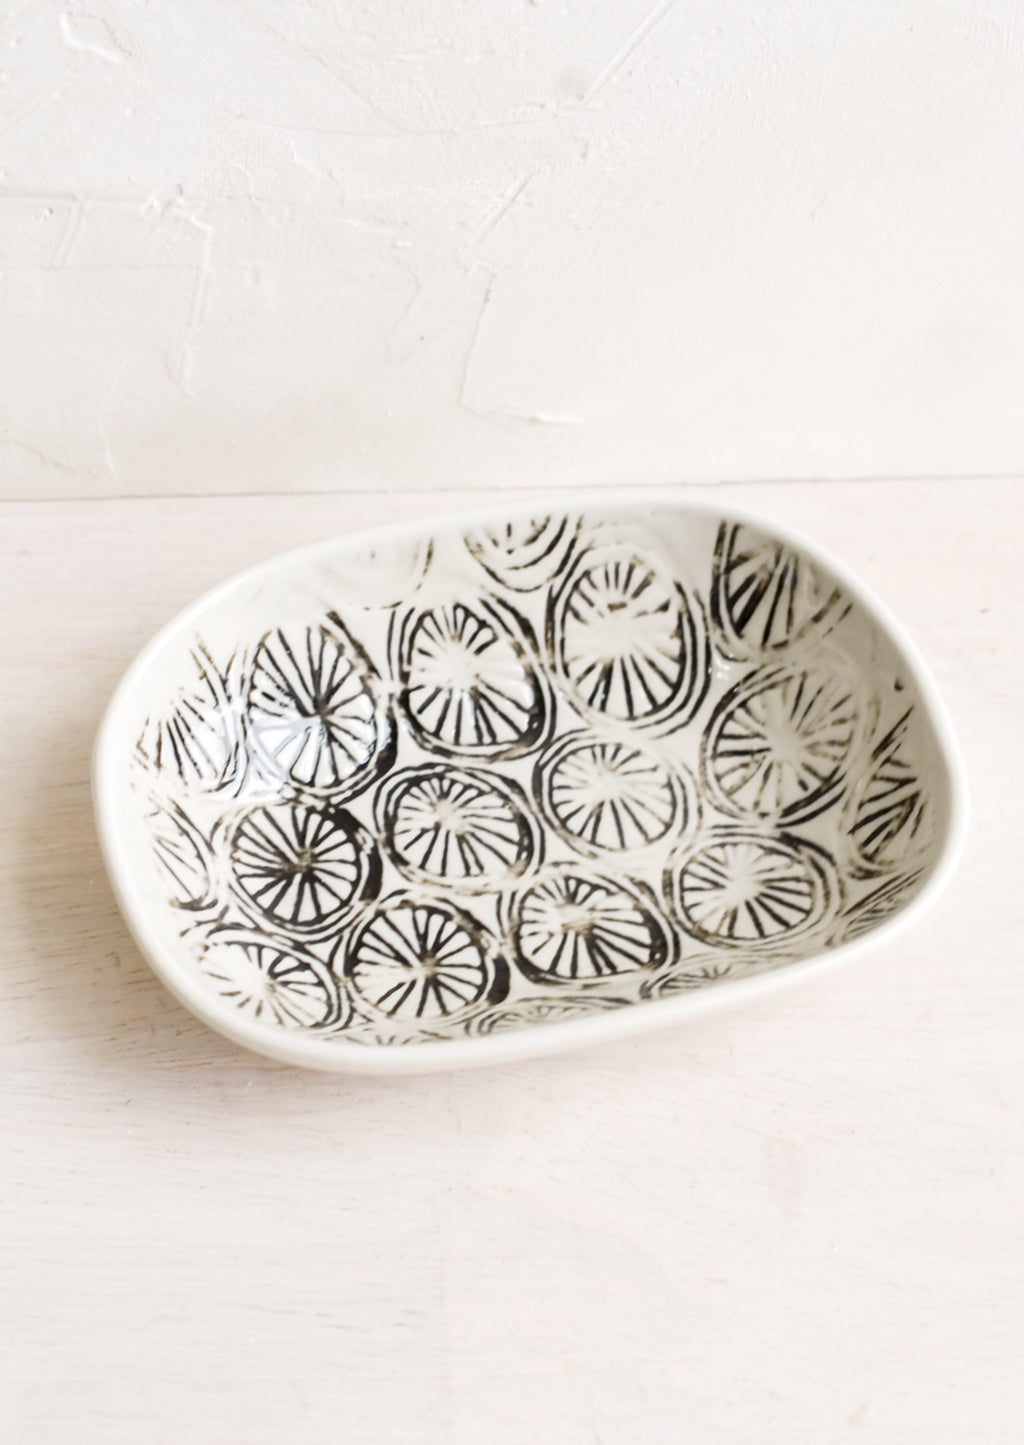 Pinwheel: A small oval ceramic dish in pinwheel pattern.